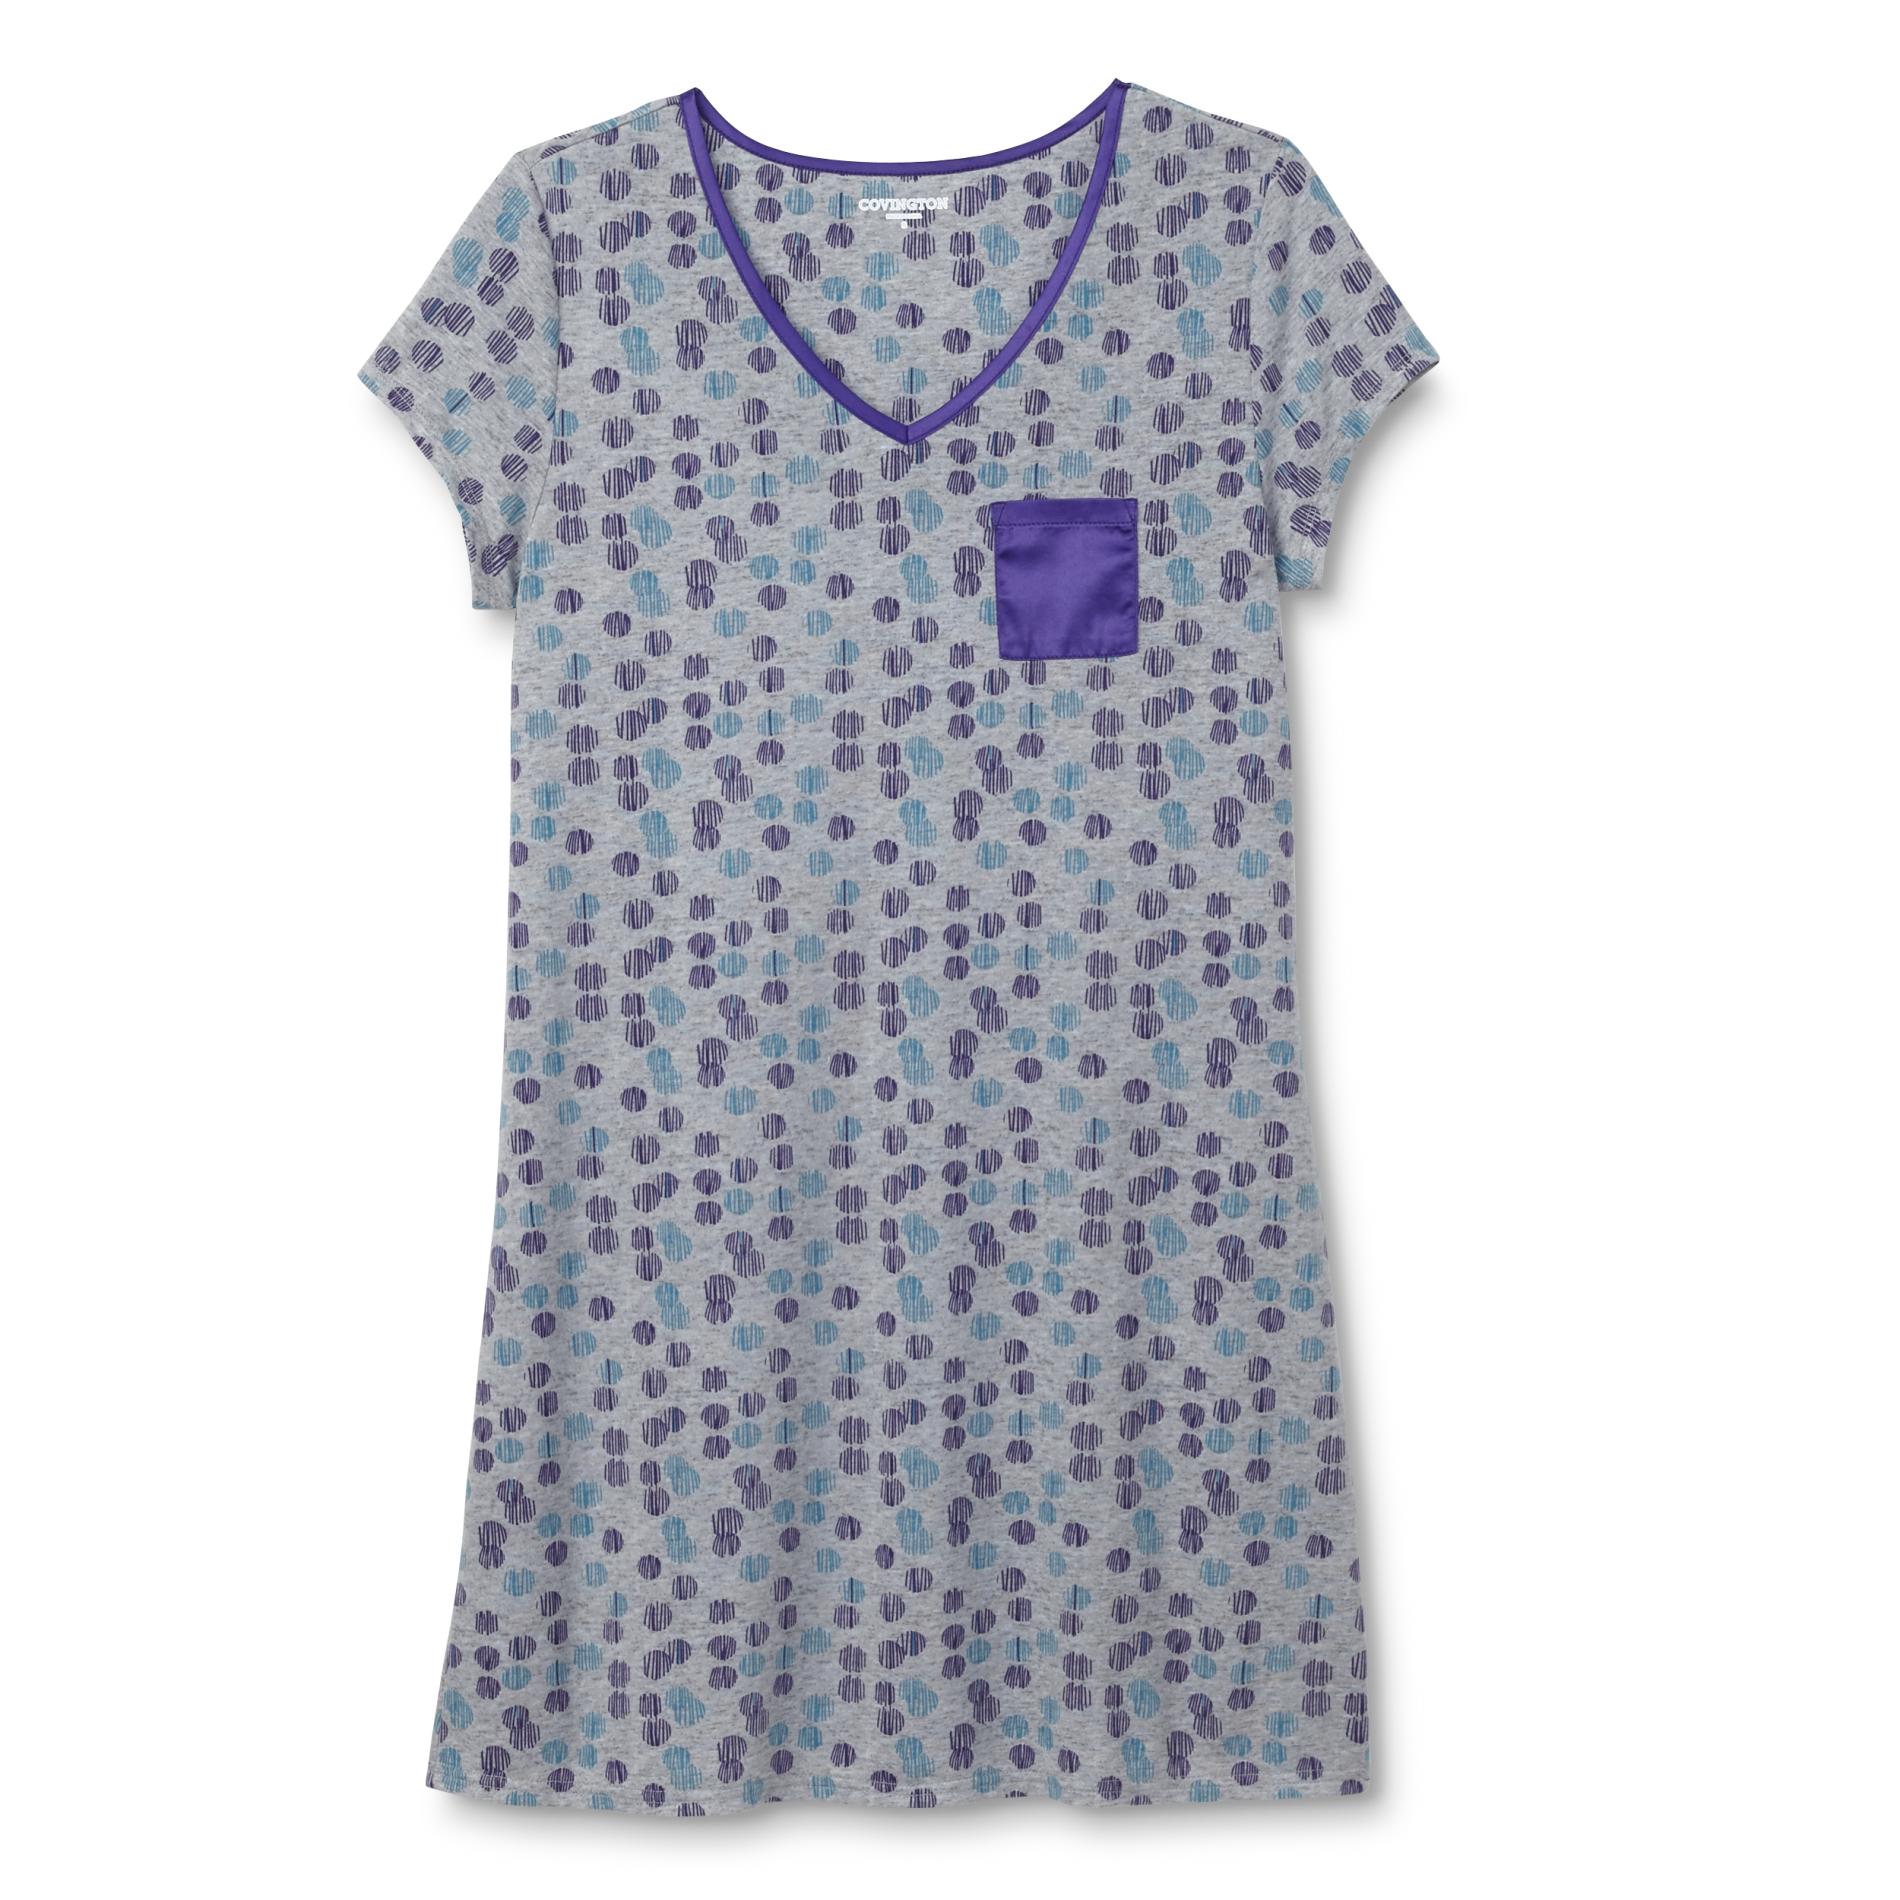 Covington Women's Sleep Shirt - Dot Print